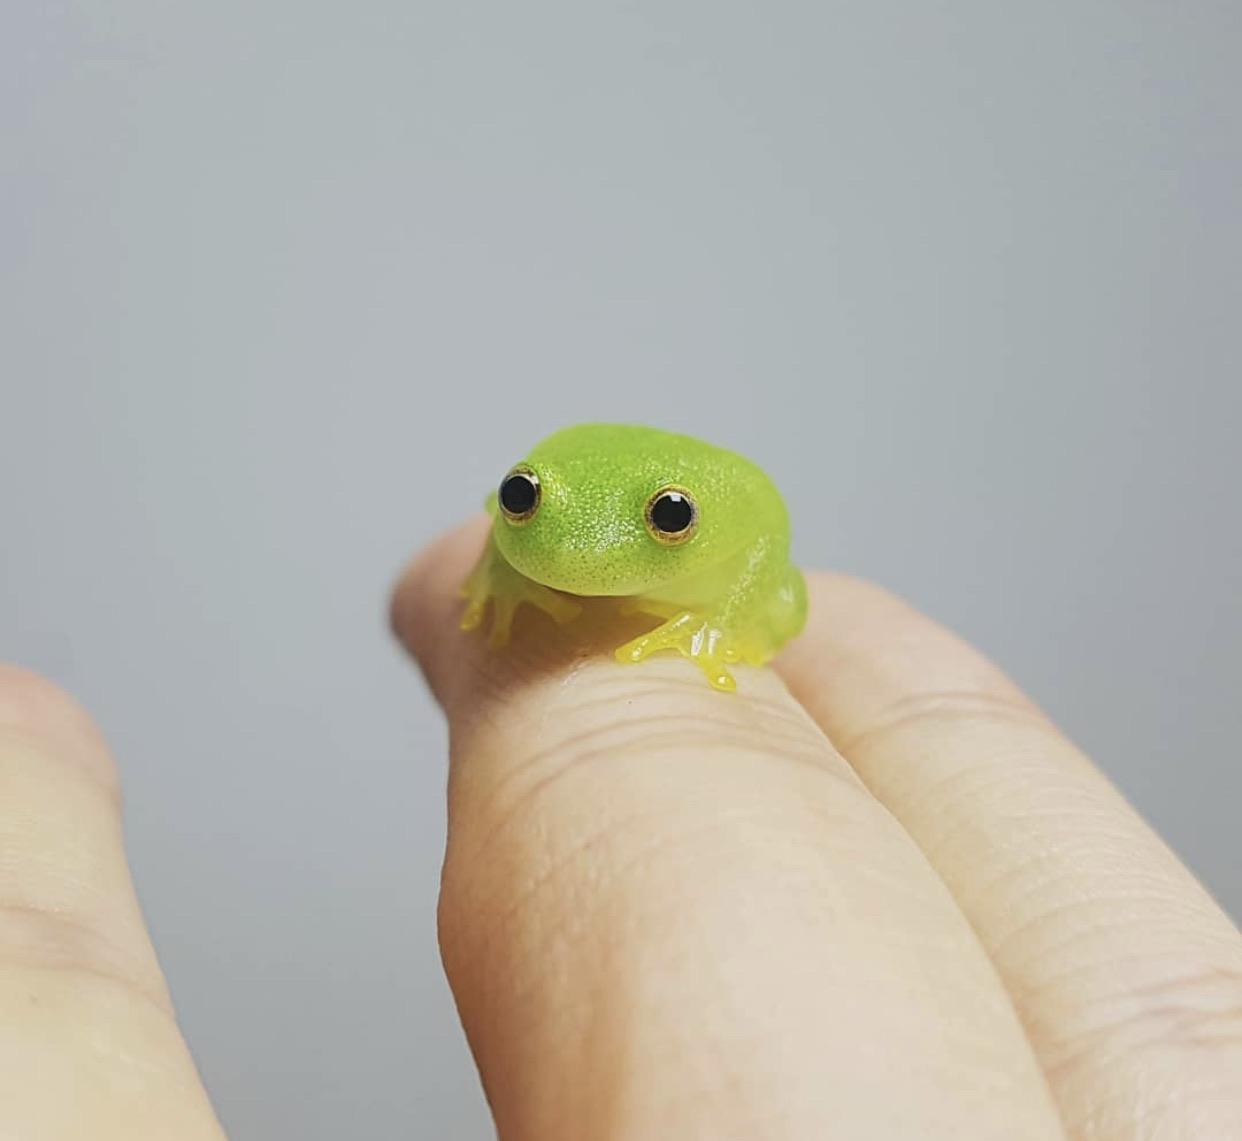 Tiny green frog looks like a gummy treat...